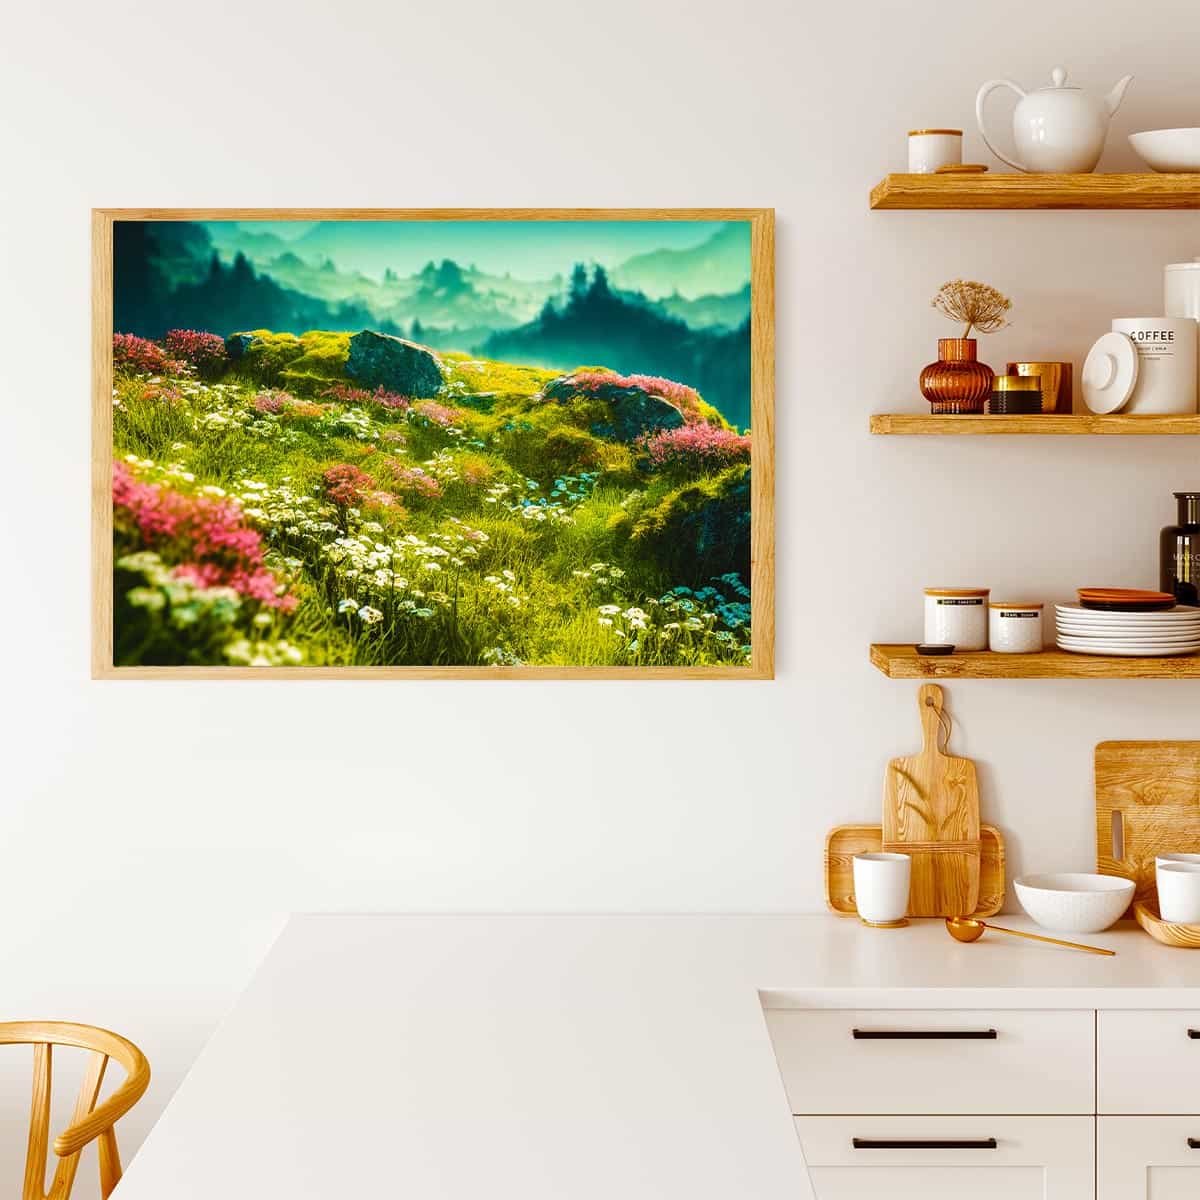 Diamond Painting - Vorsprung, Blumenwiese - gedruckt in Ultra-HD - Berge, Blumen, Horizontal, Landschaft